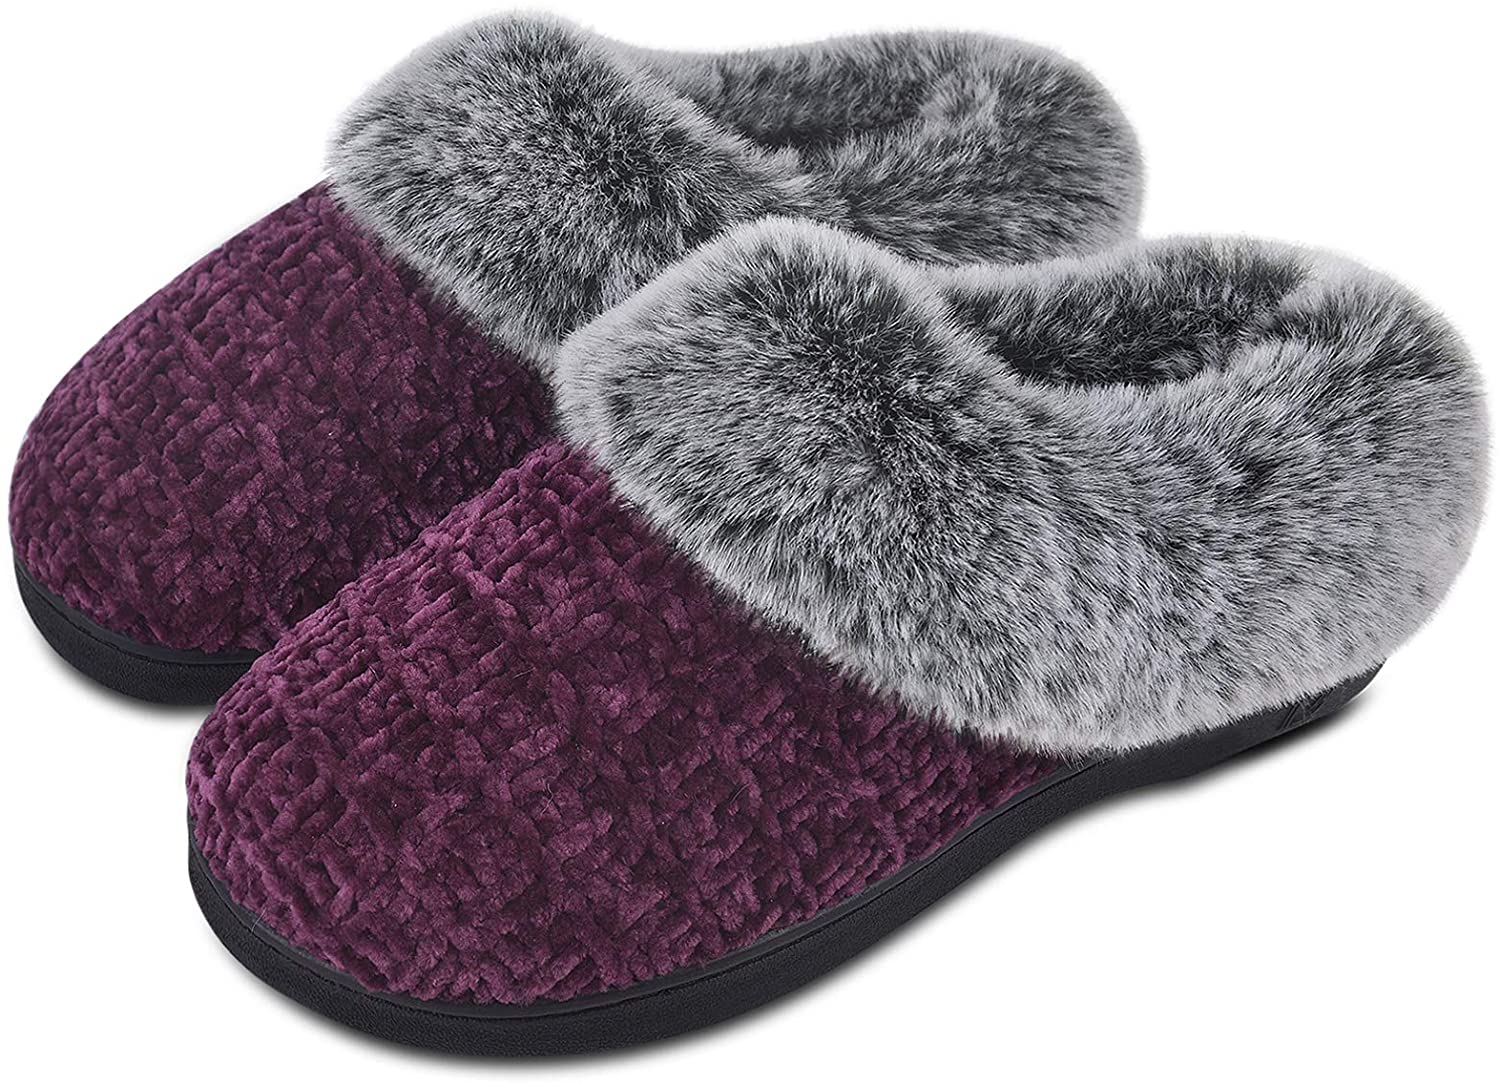 Dainzuy Women Soft Home Slippers Winter Warm Comfy Slip On Memory Foam Slippers Plush Soft Anti-Slip House Shoes 